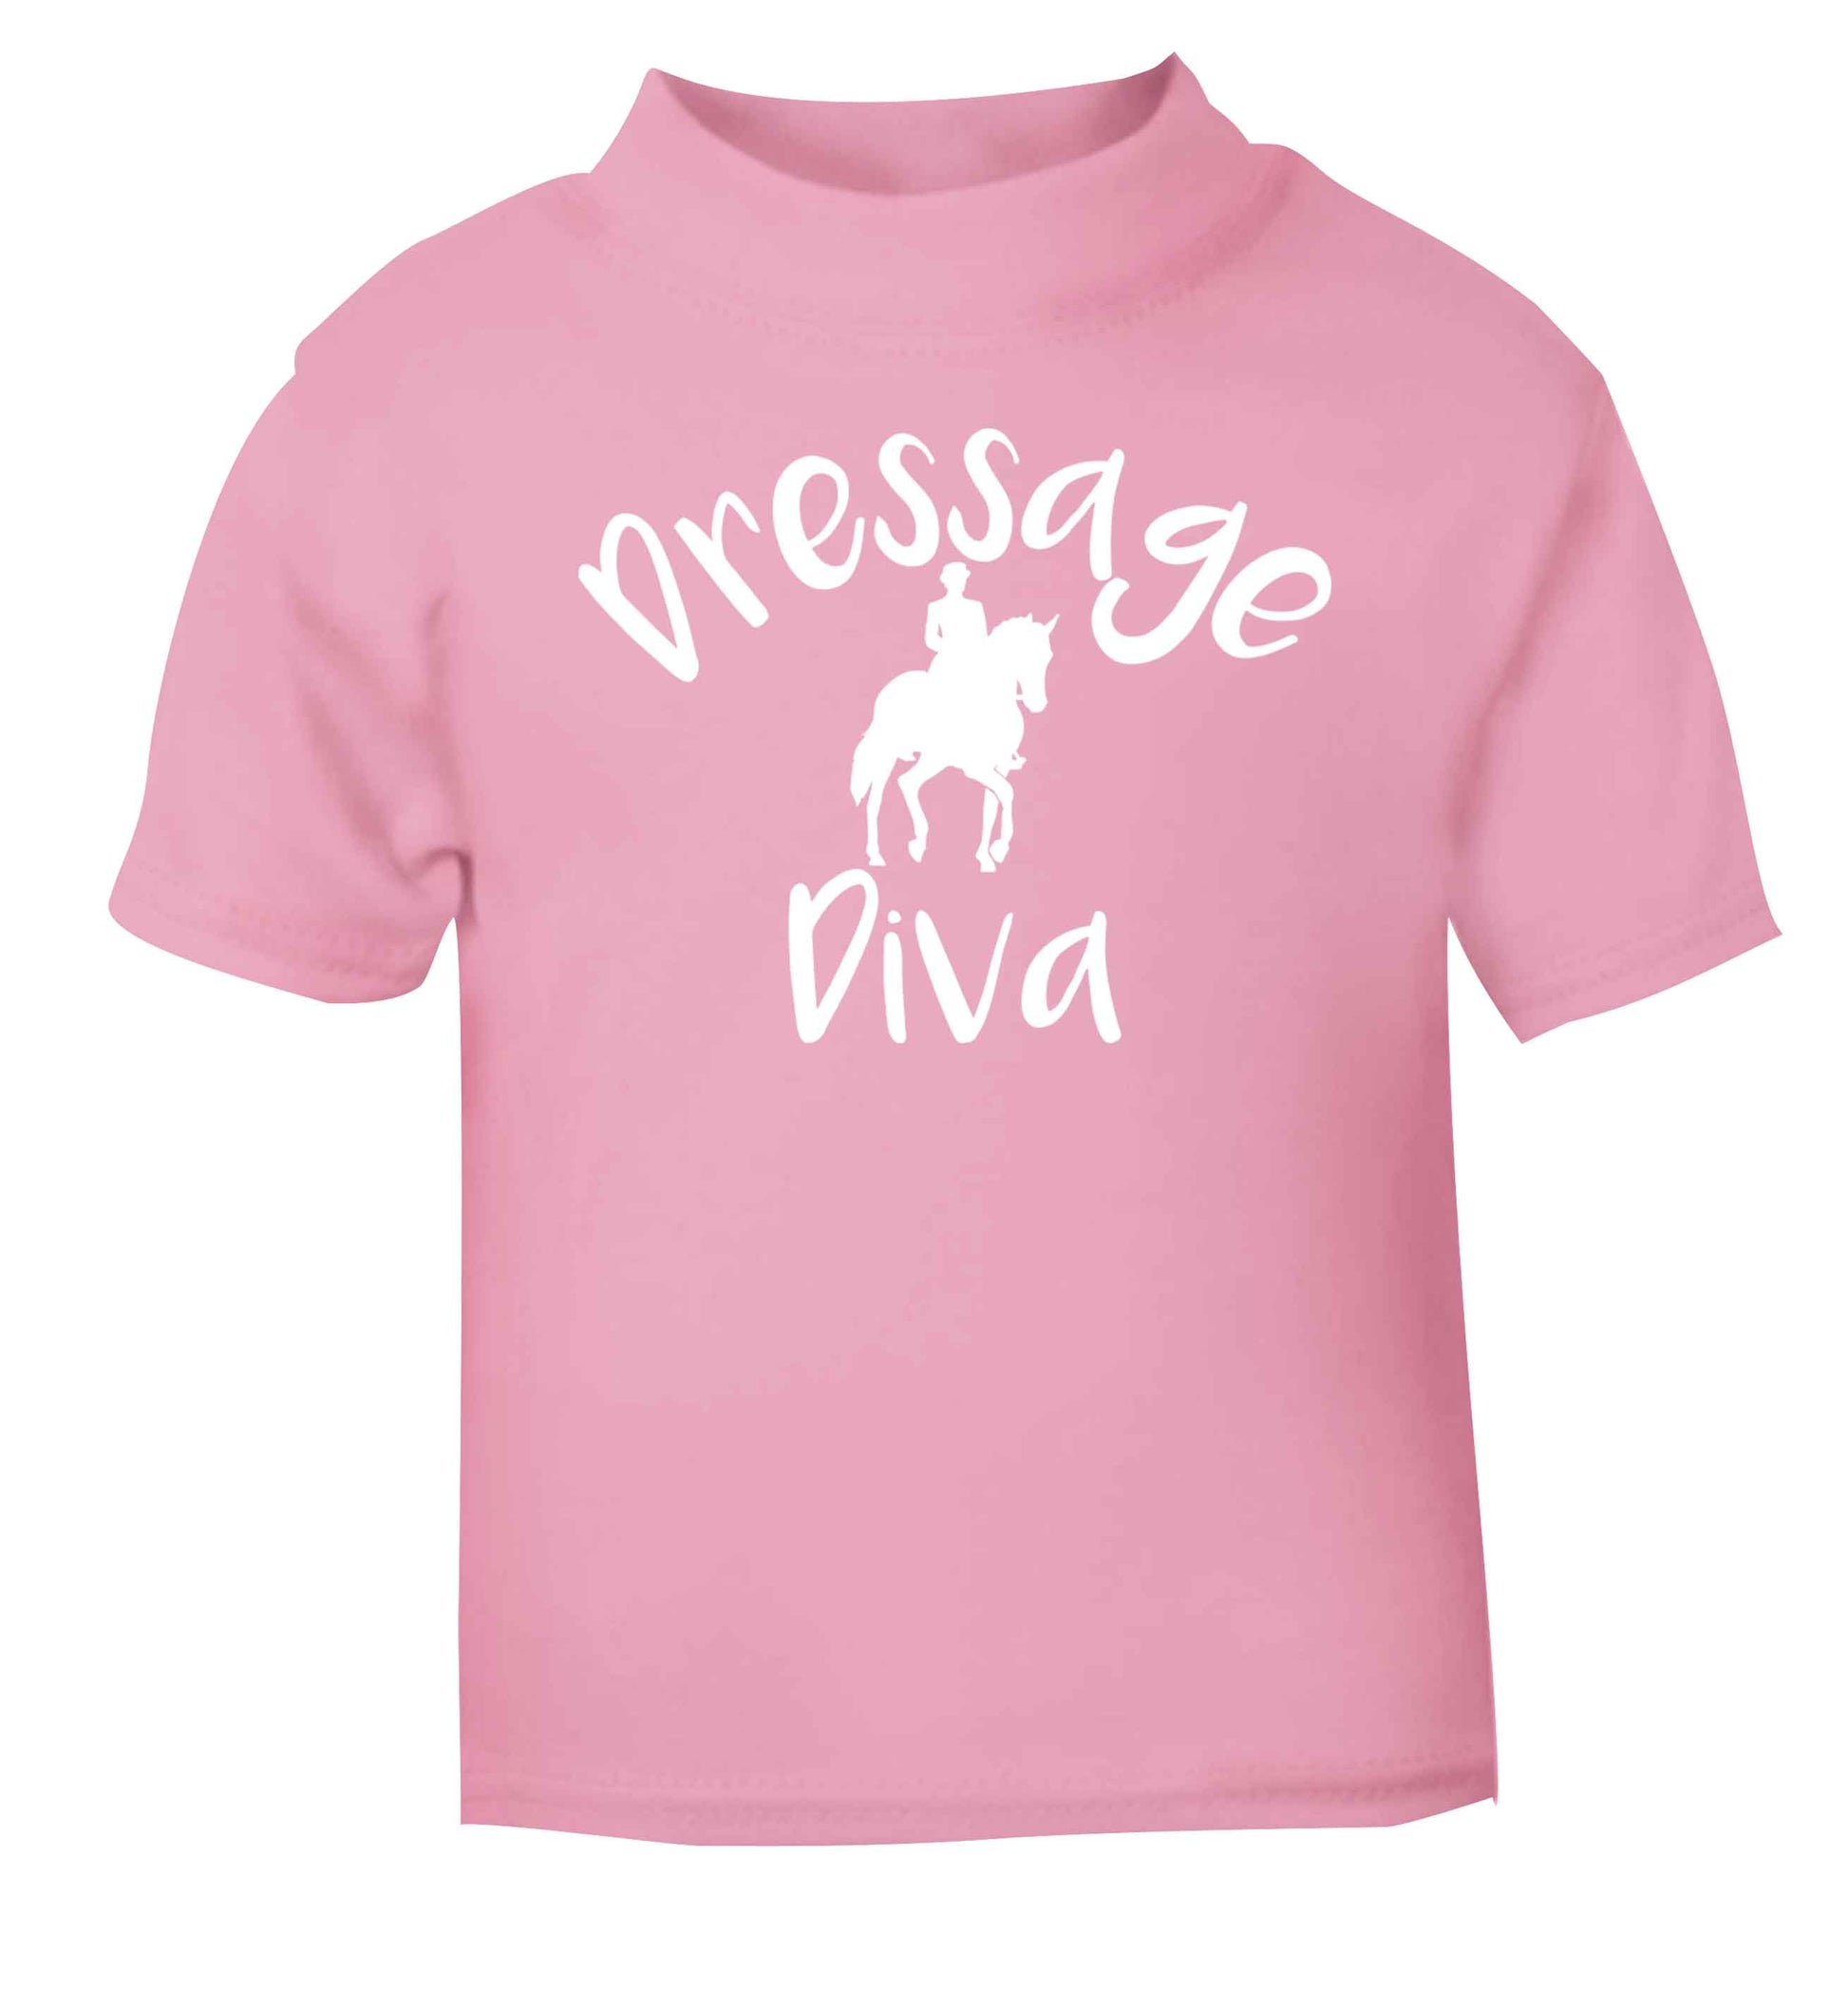 Dressage diva light pink baby toddler Tshirt 2 Years